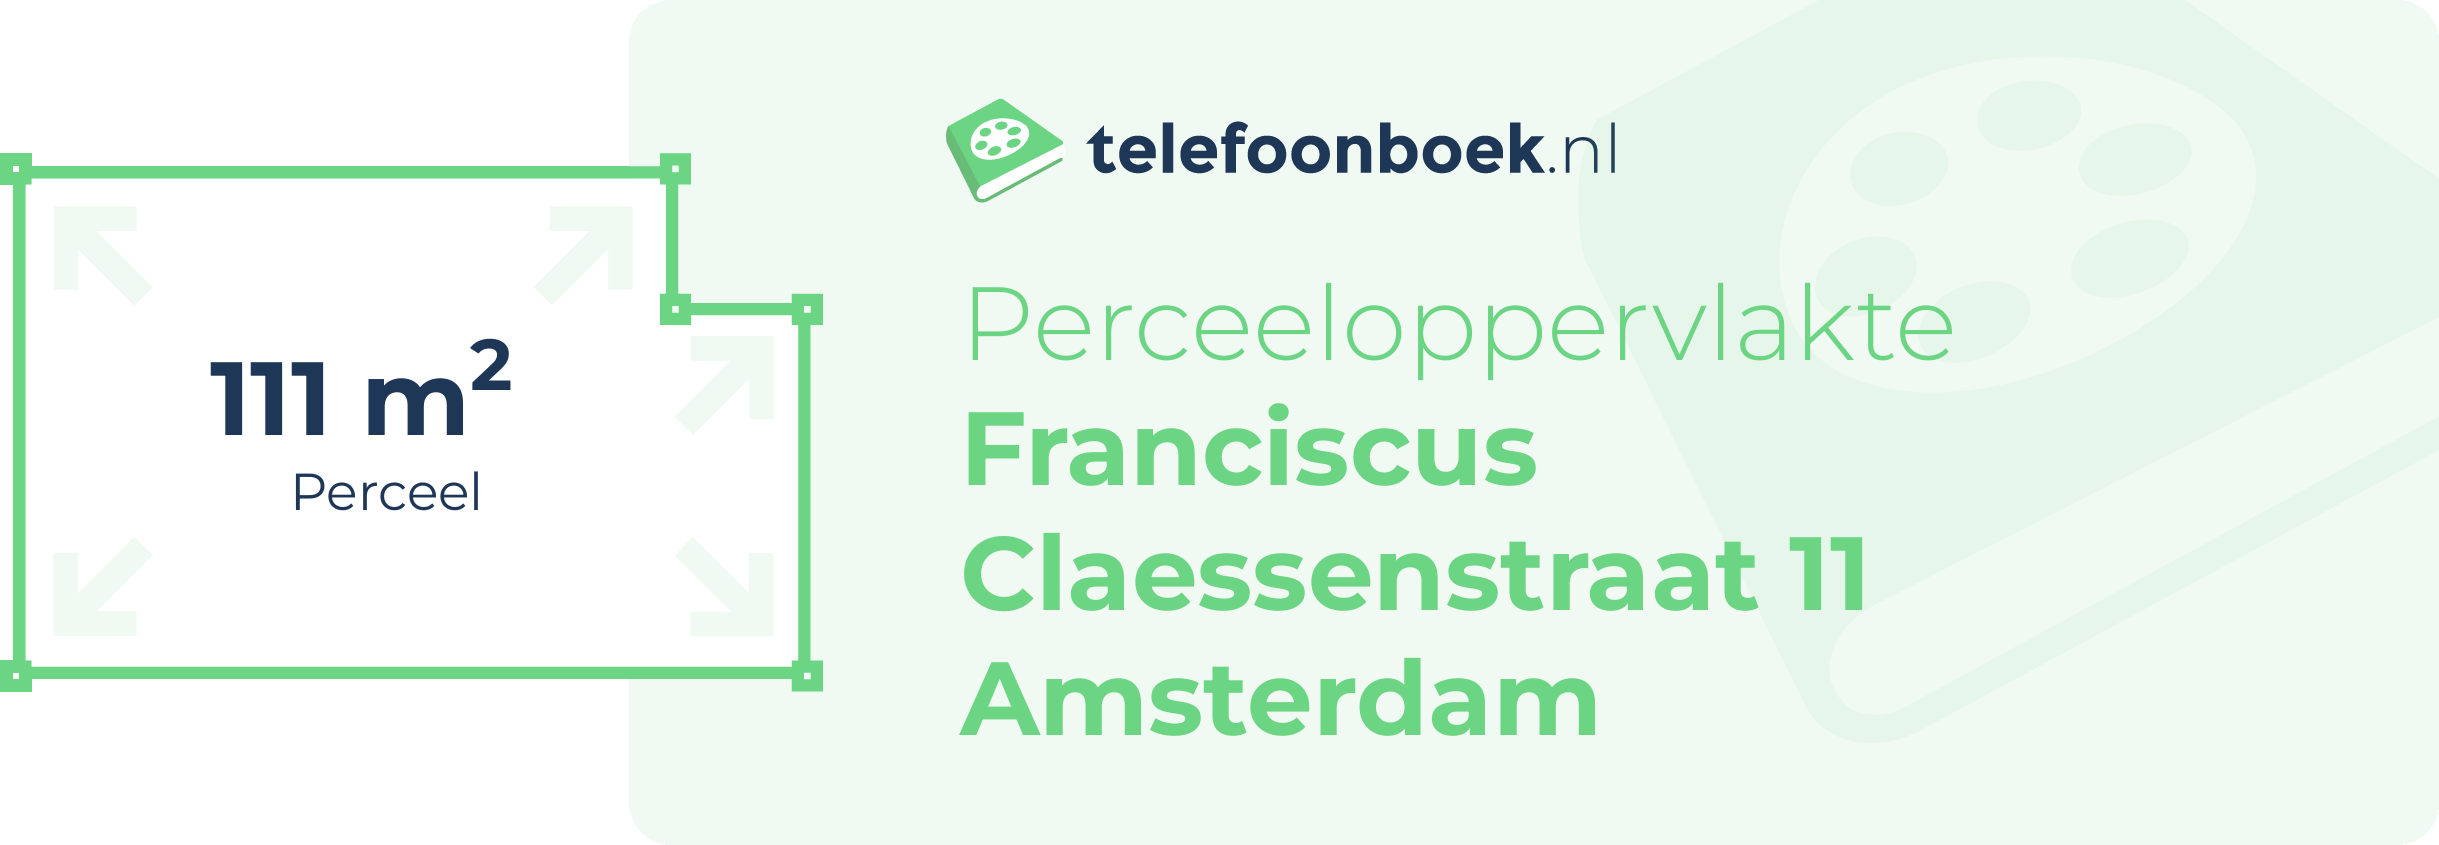 Perceeloppervlakte Franciscus Claessenstraat 11 Amsterdam